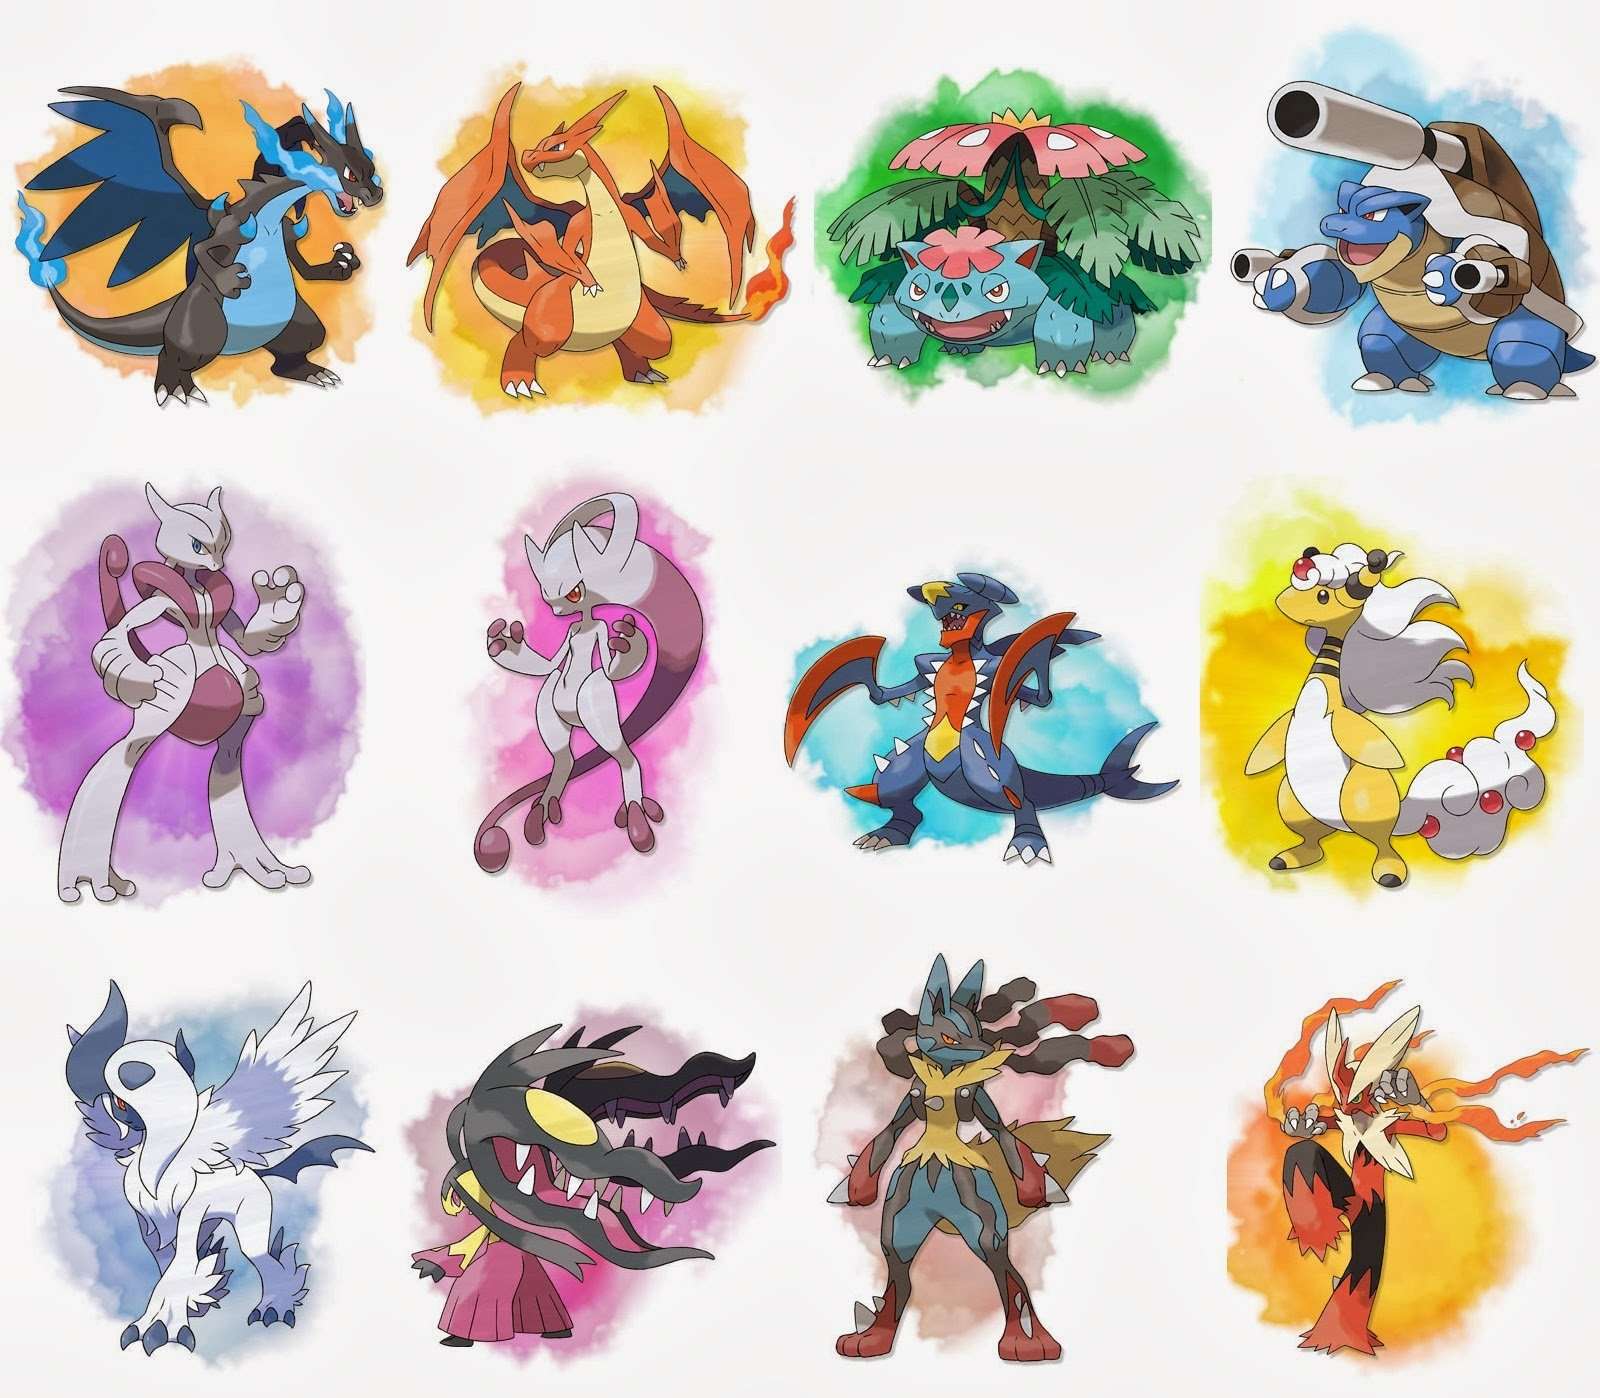 [49+] Pokemon Mega Evolutions Wallpaper on WallpaperSafari